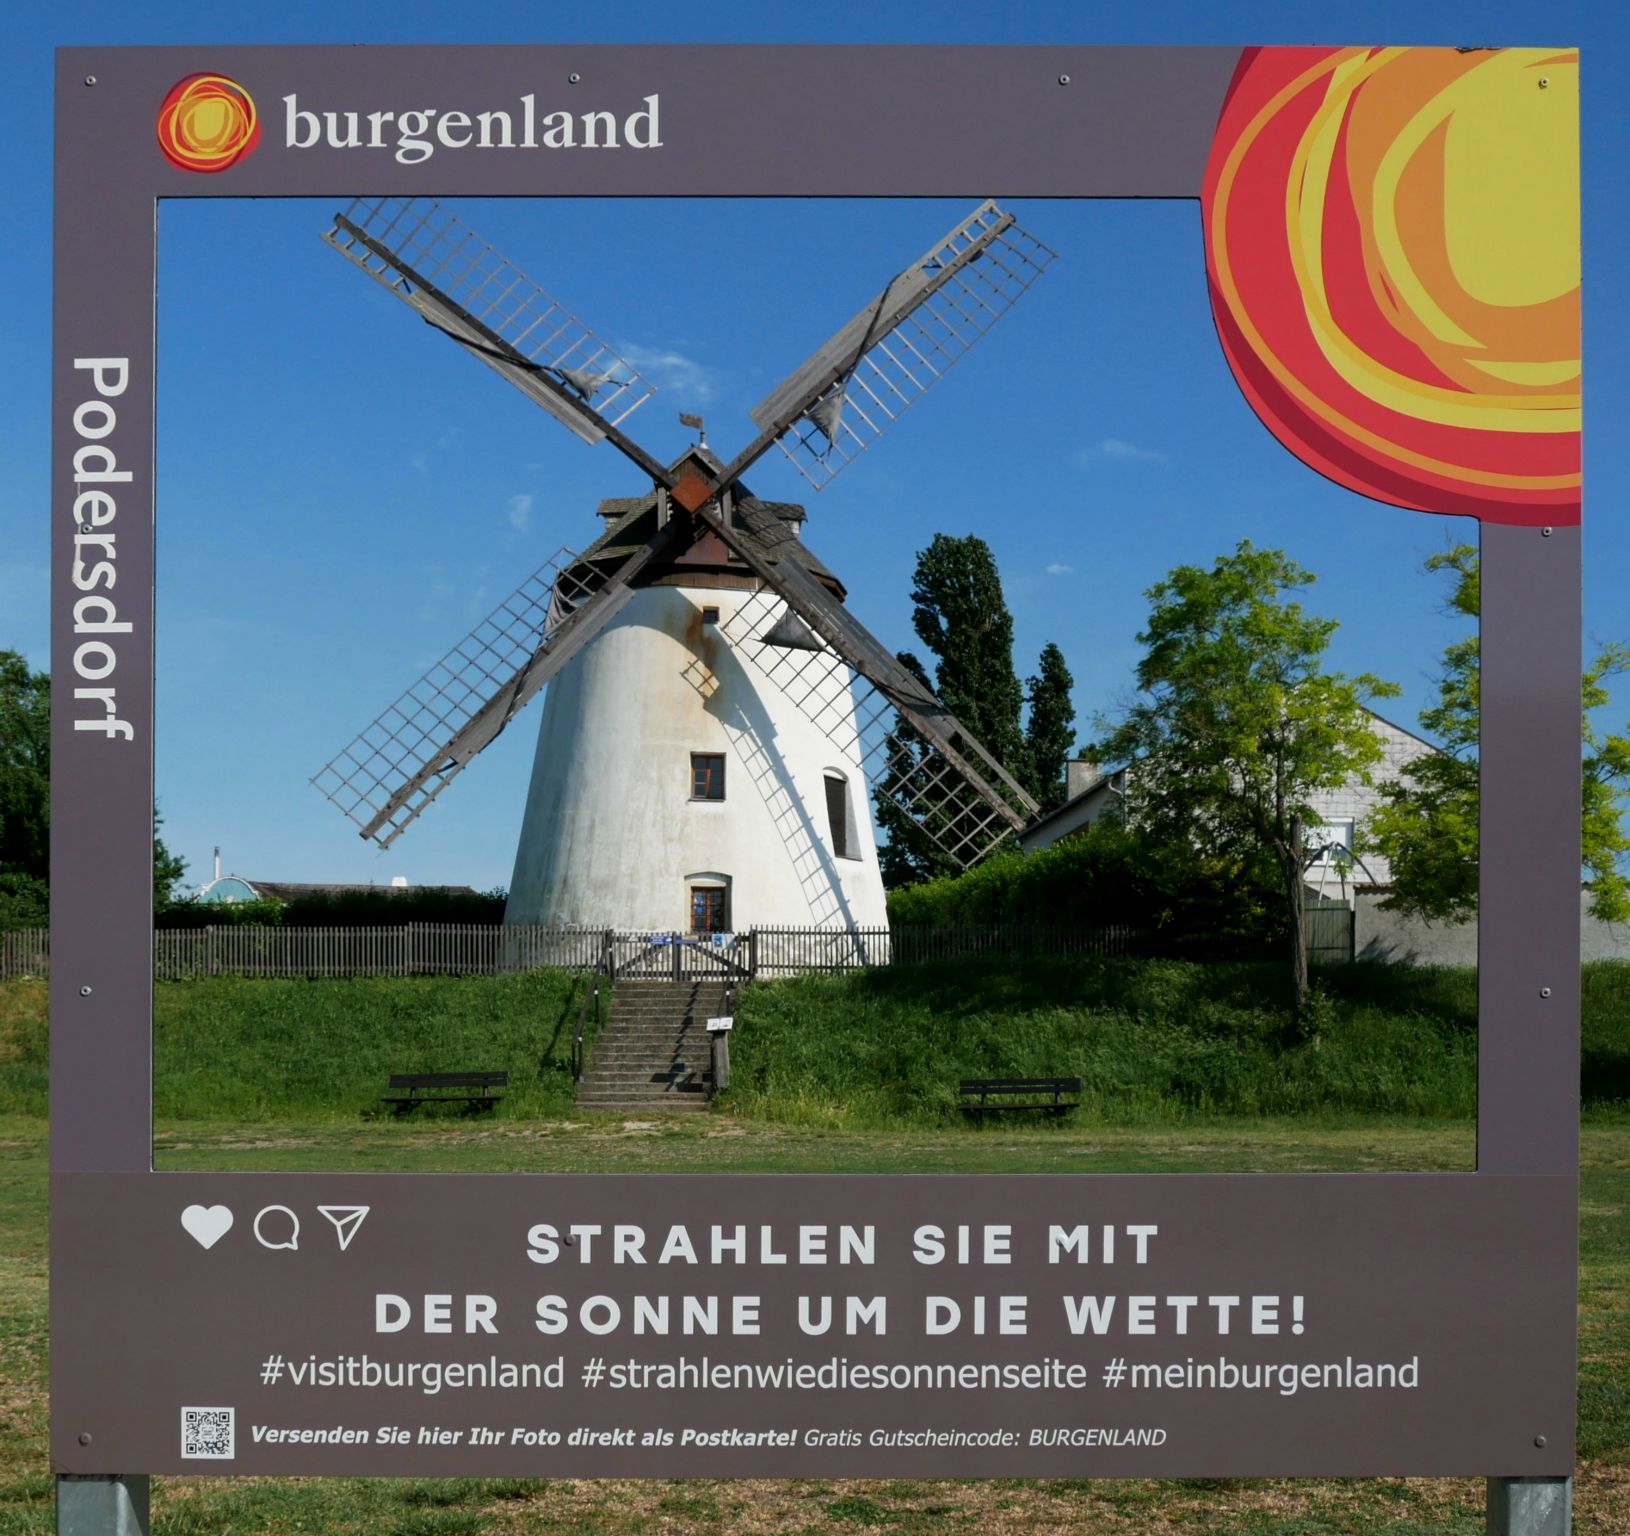 Windmühle Podersdorf